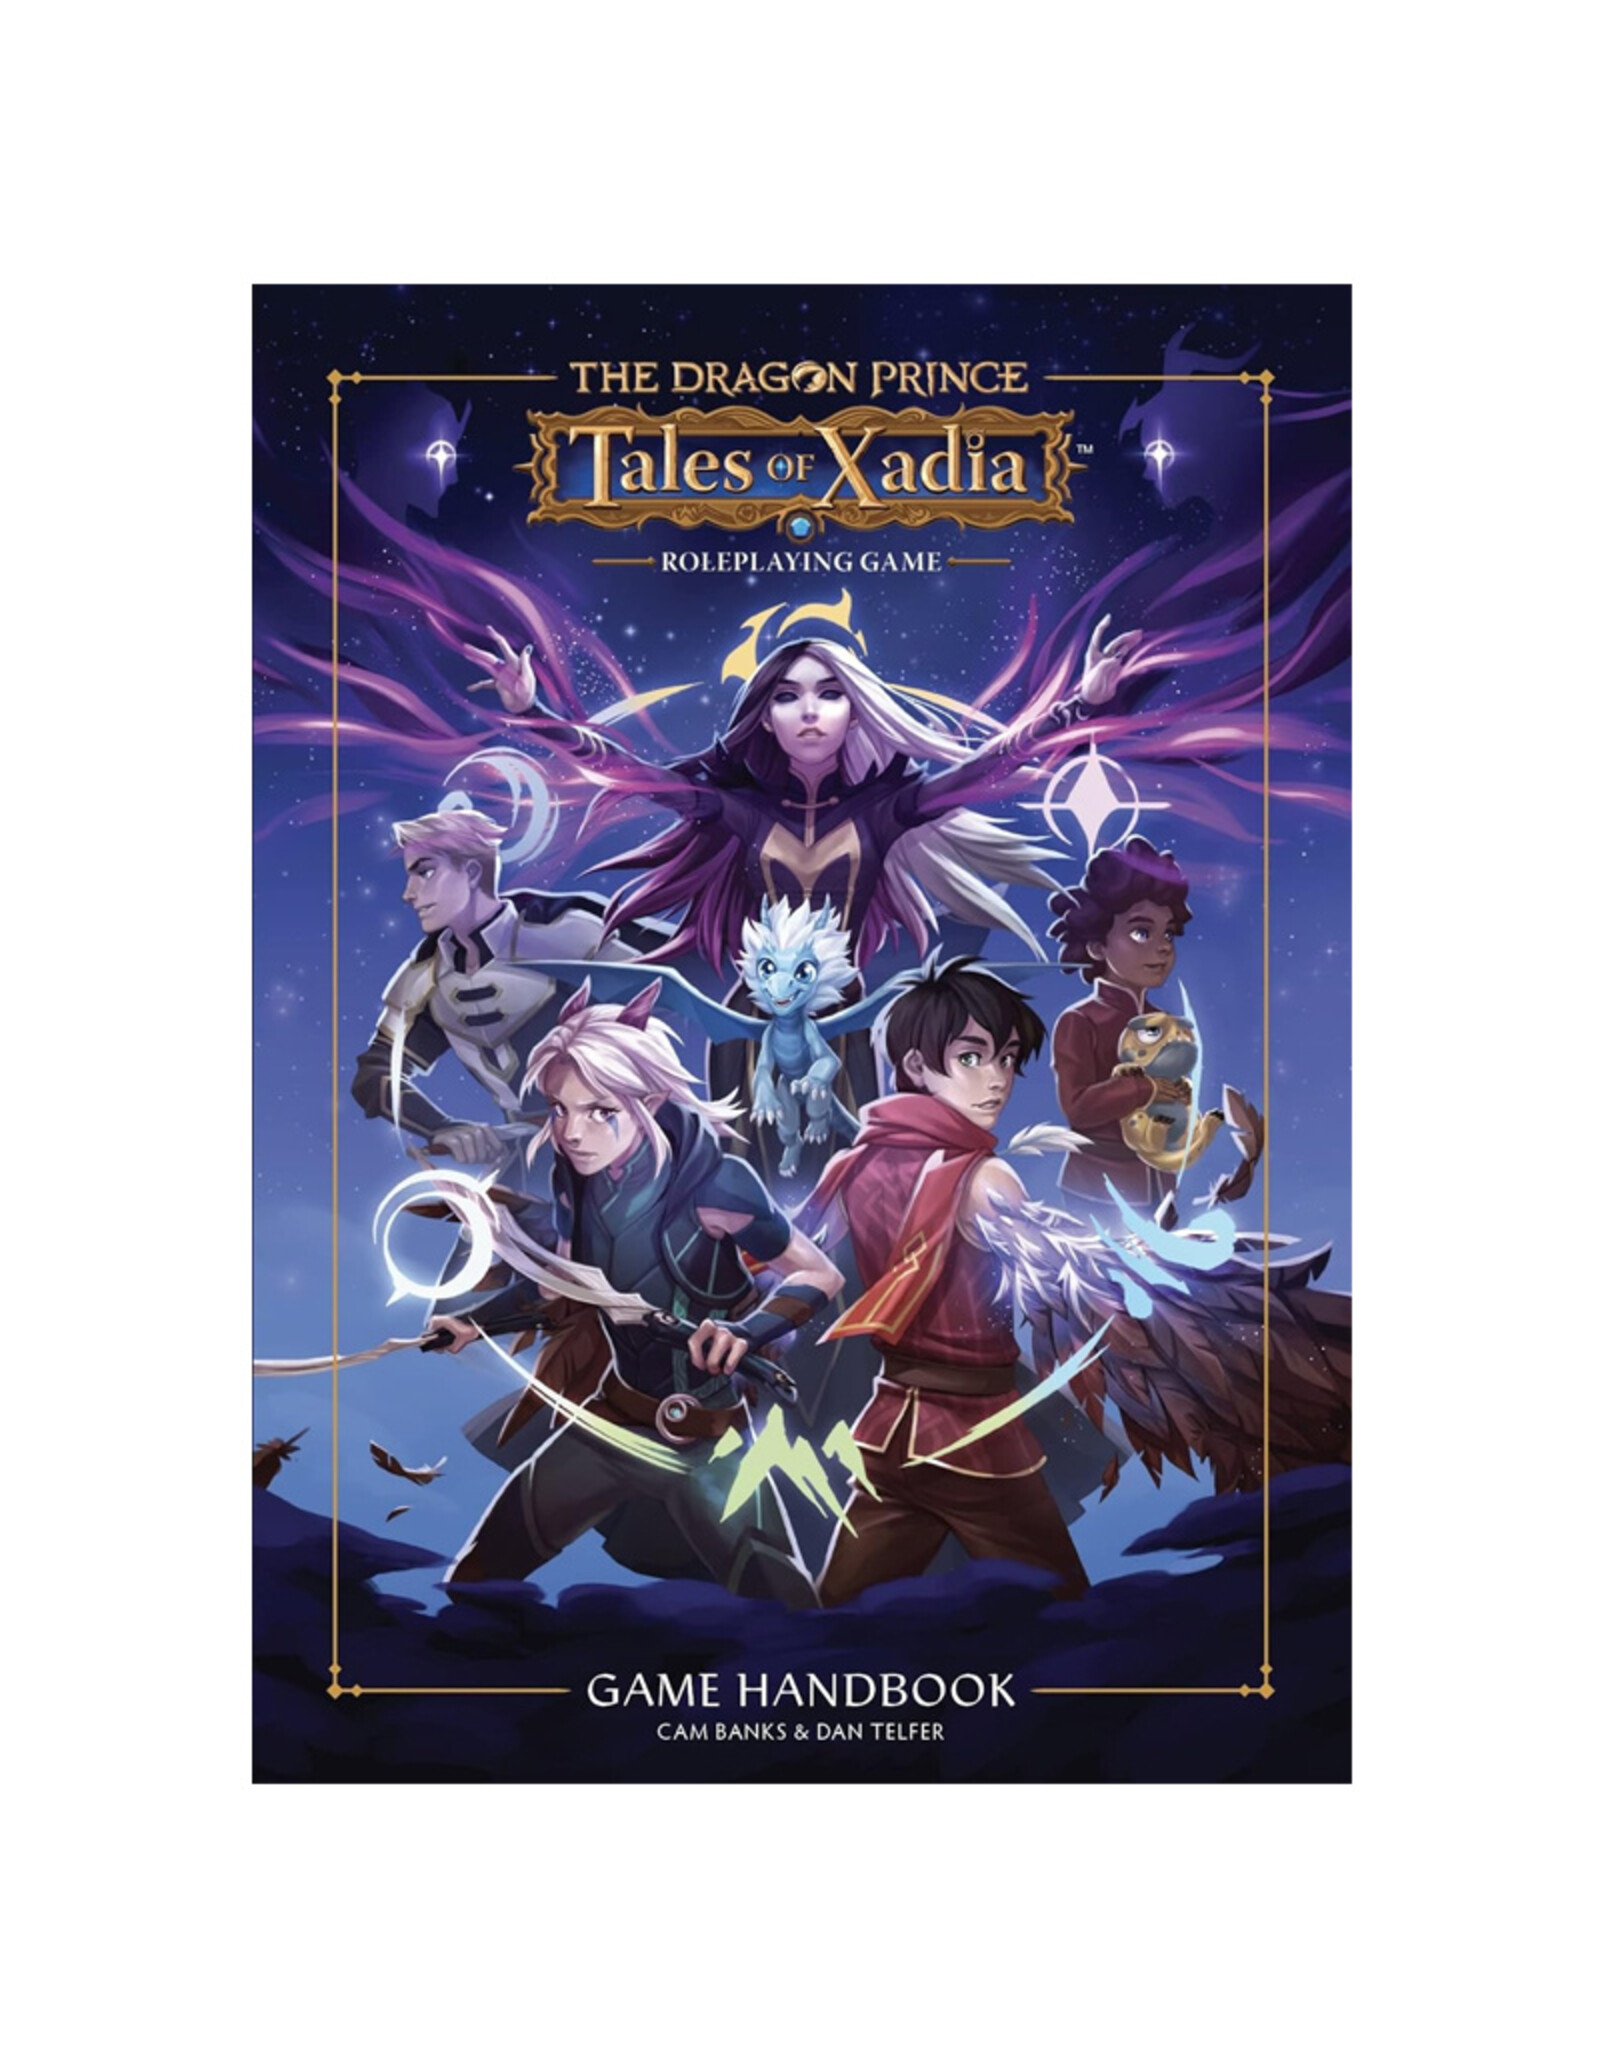 Wonderstorm Tales of Xadia: The Dragon Prince Roleplaying Game Handbook